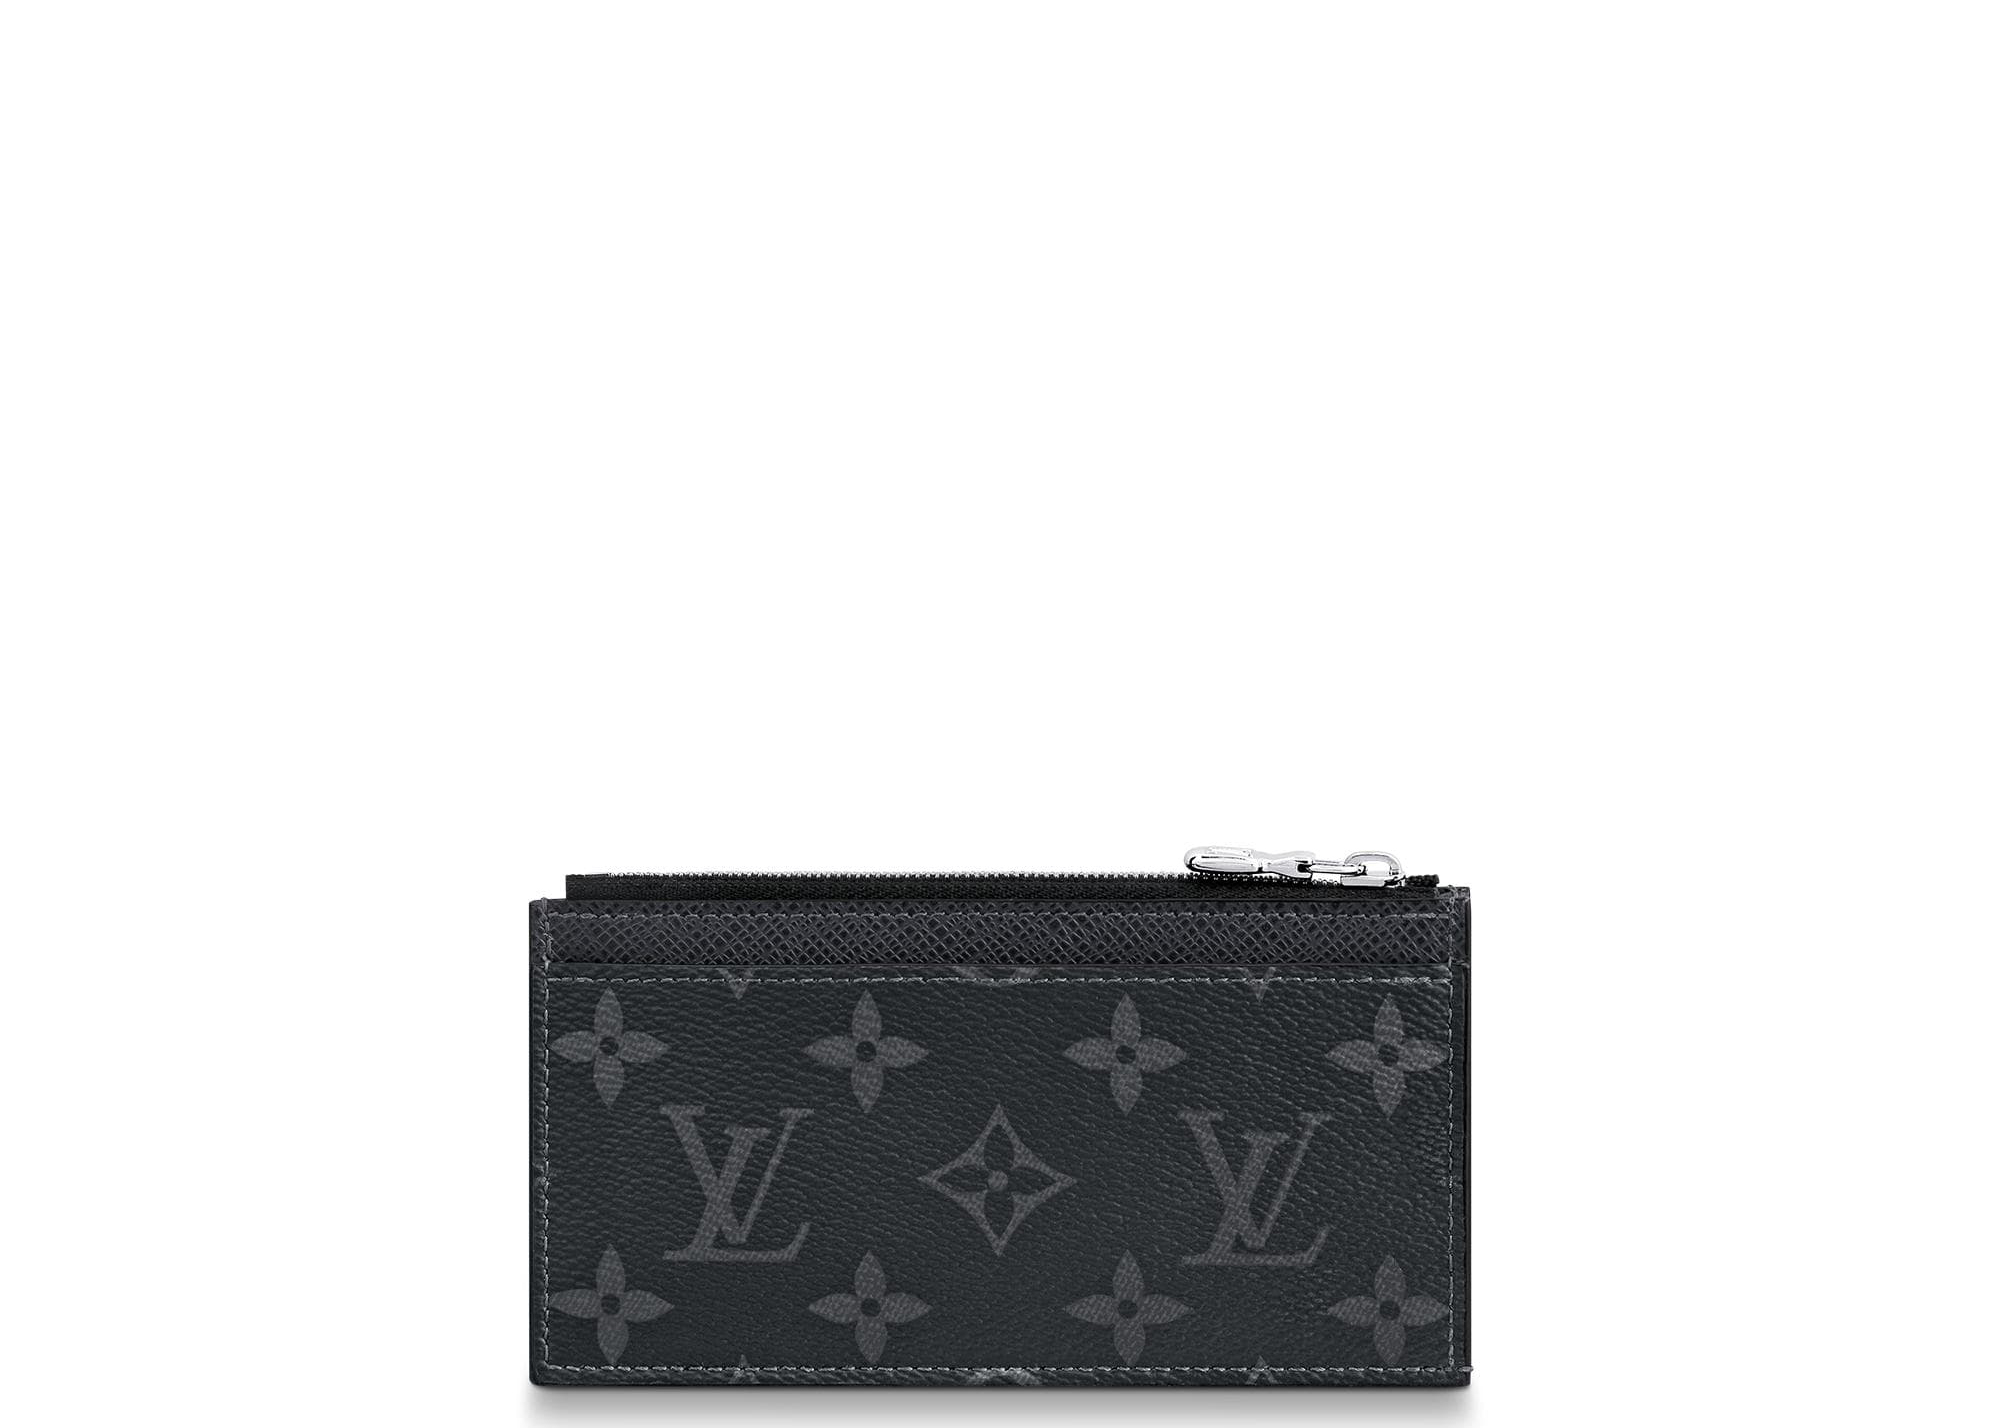 Louis Vuitton Monogram Amarante Vernis Heart Coin Purse AUTHENTIC GUC | eBay